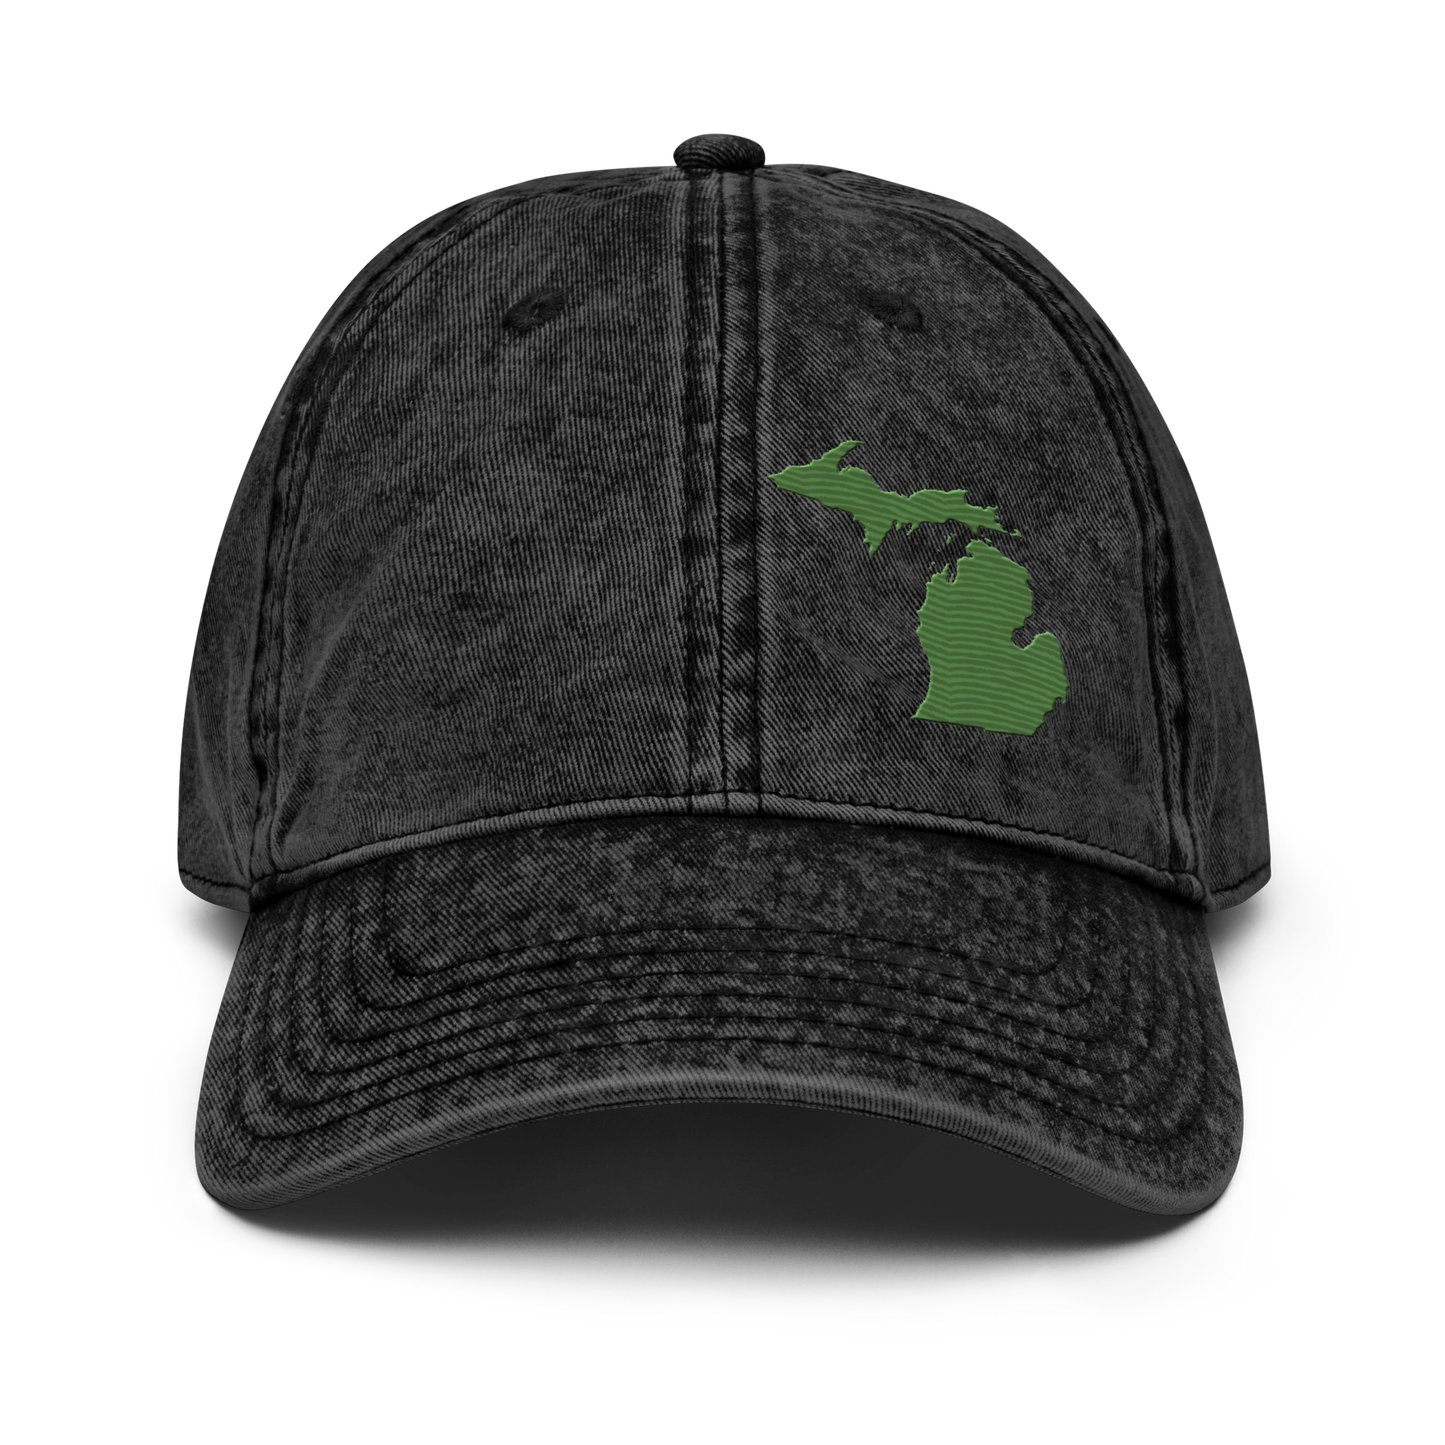 Michigan Vintage Baseball Caps | Pine Green Outline